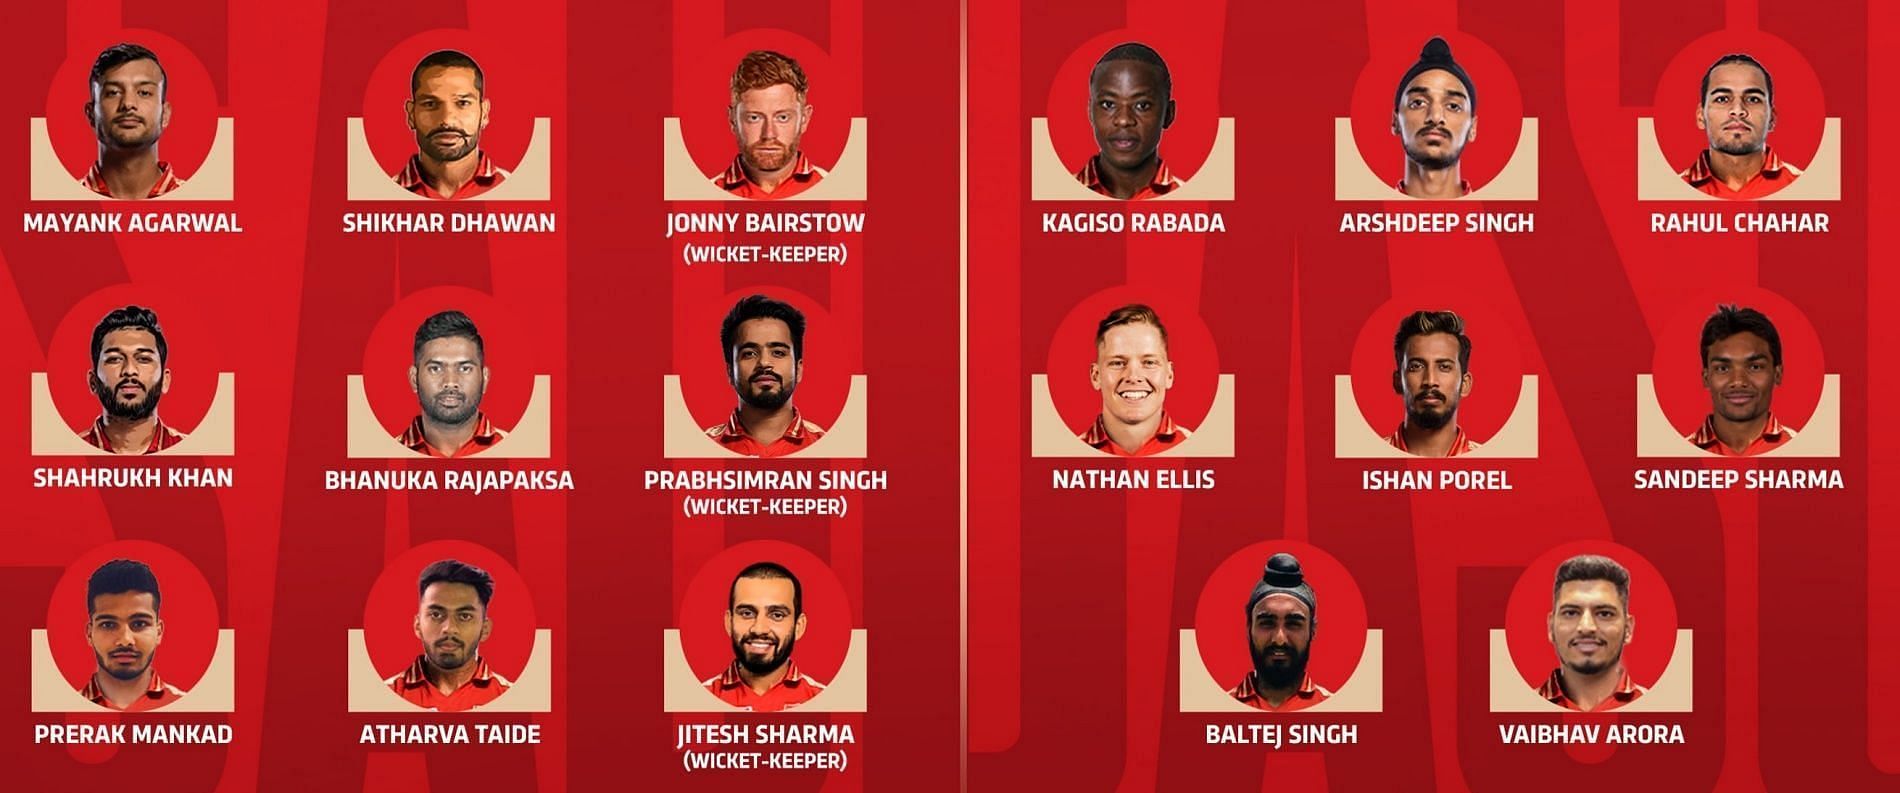 Members of Punjab Kings (PBKS) squad for IPL 2022. Pic: @PunjabKingsIPL/ Twitter